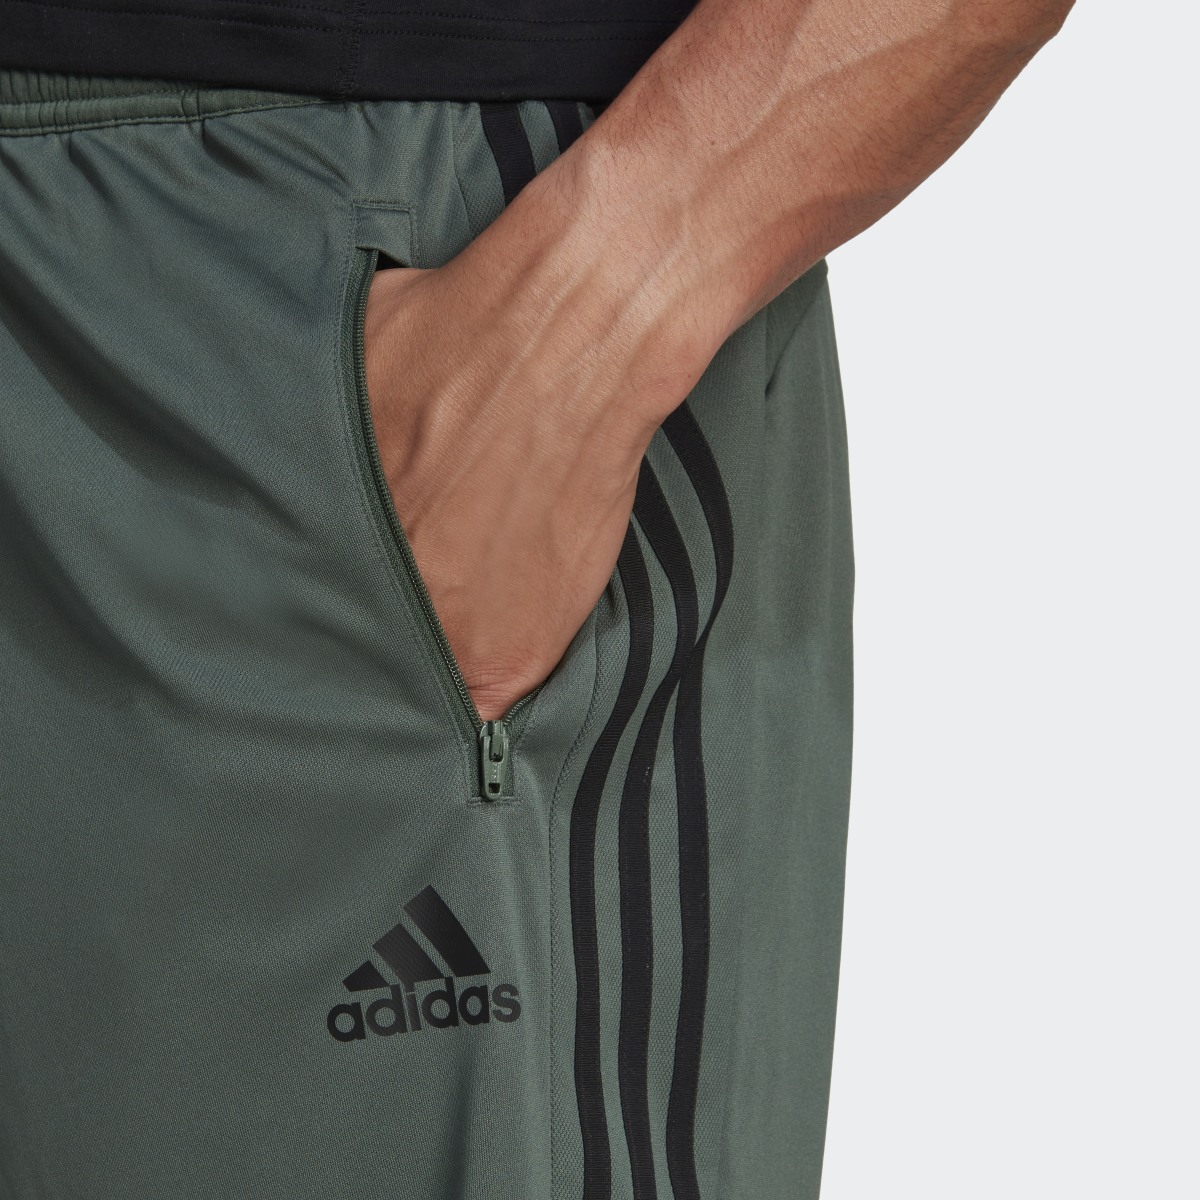 Adidas Primeblue Designed to Move Sport 3-Stripes Shorts. 5